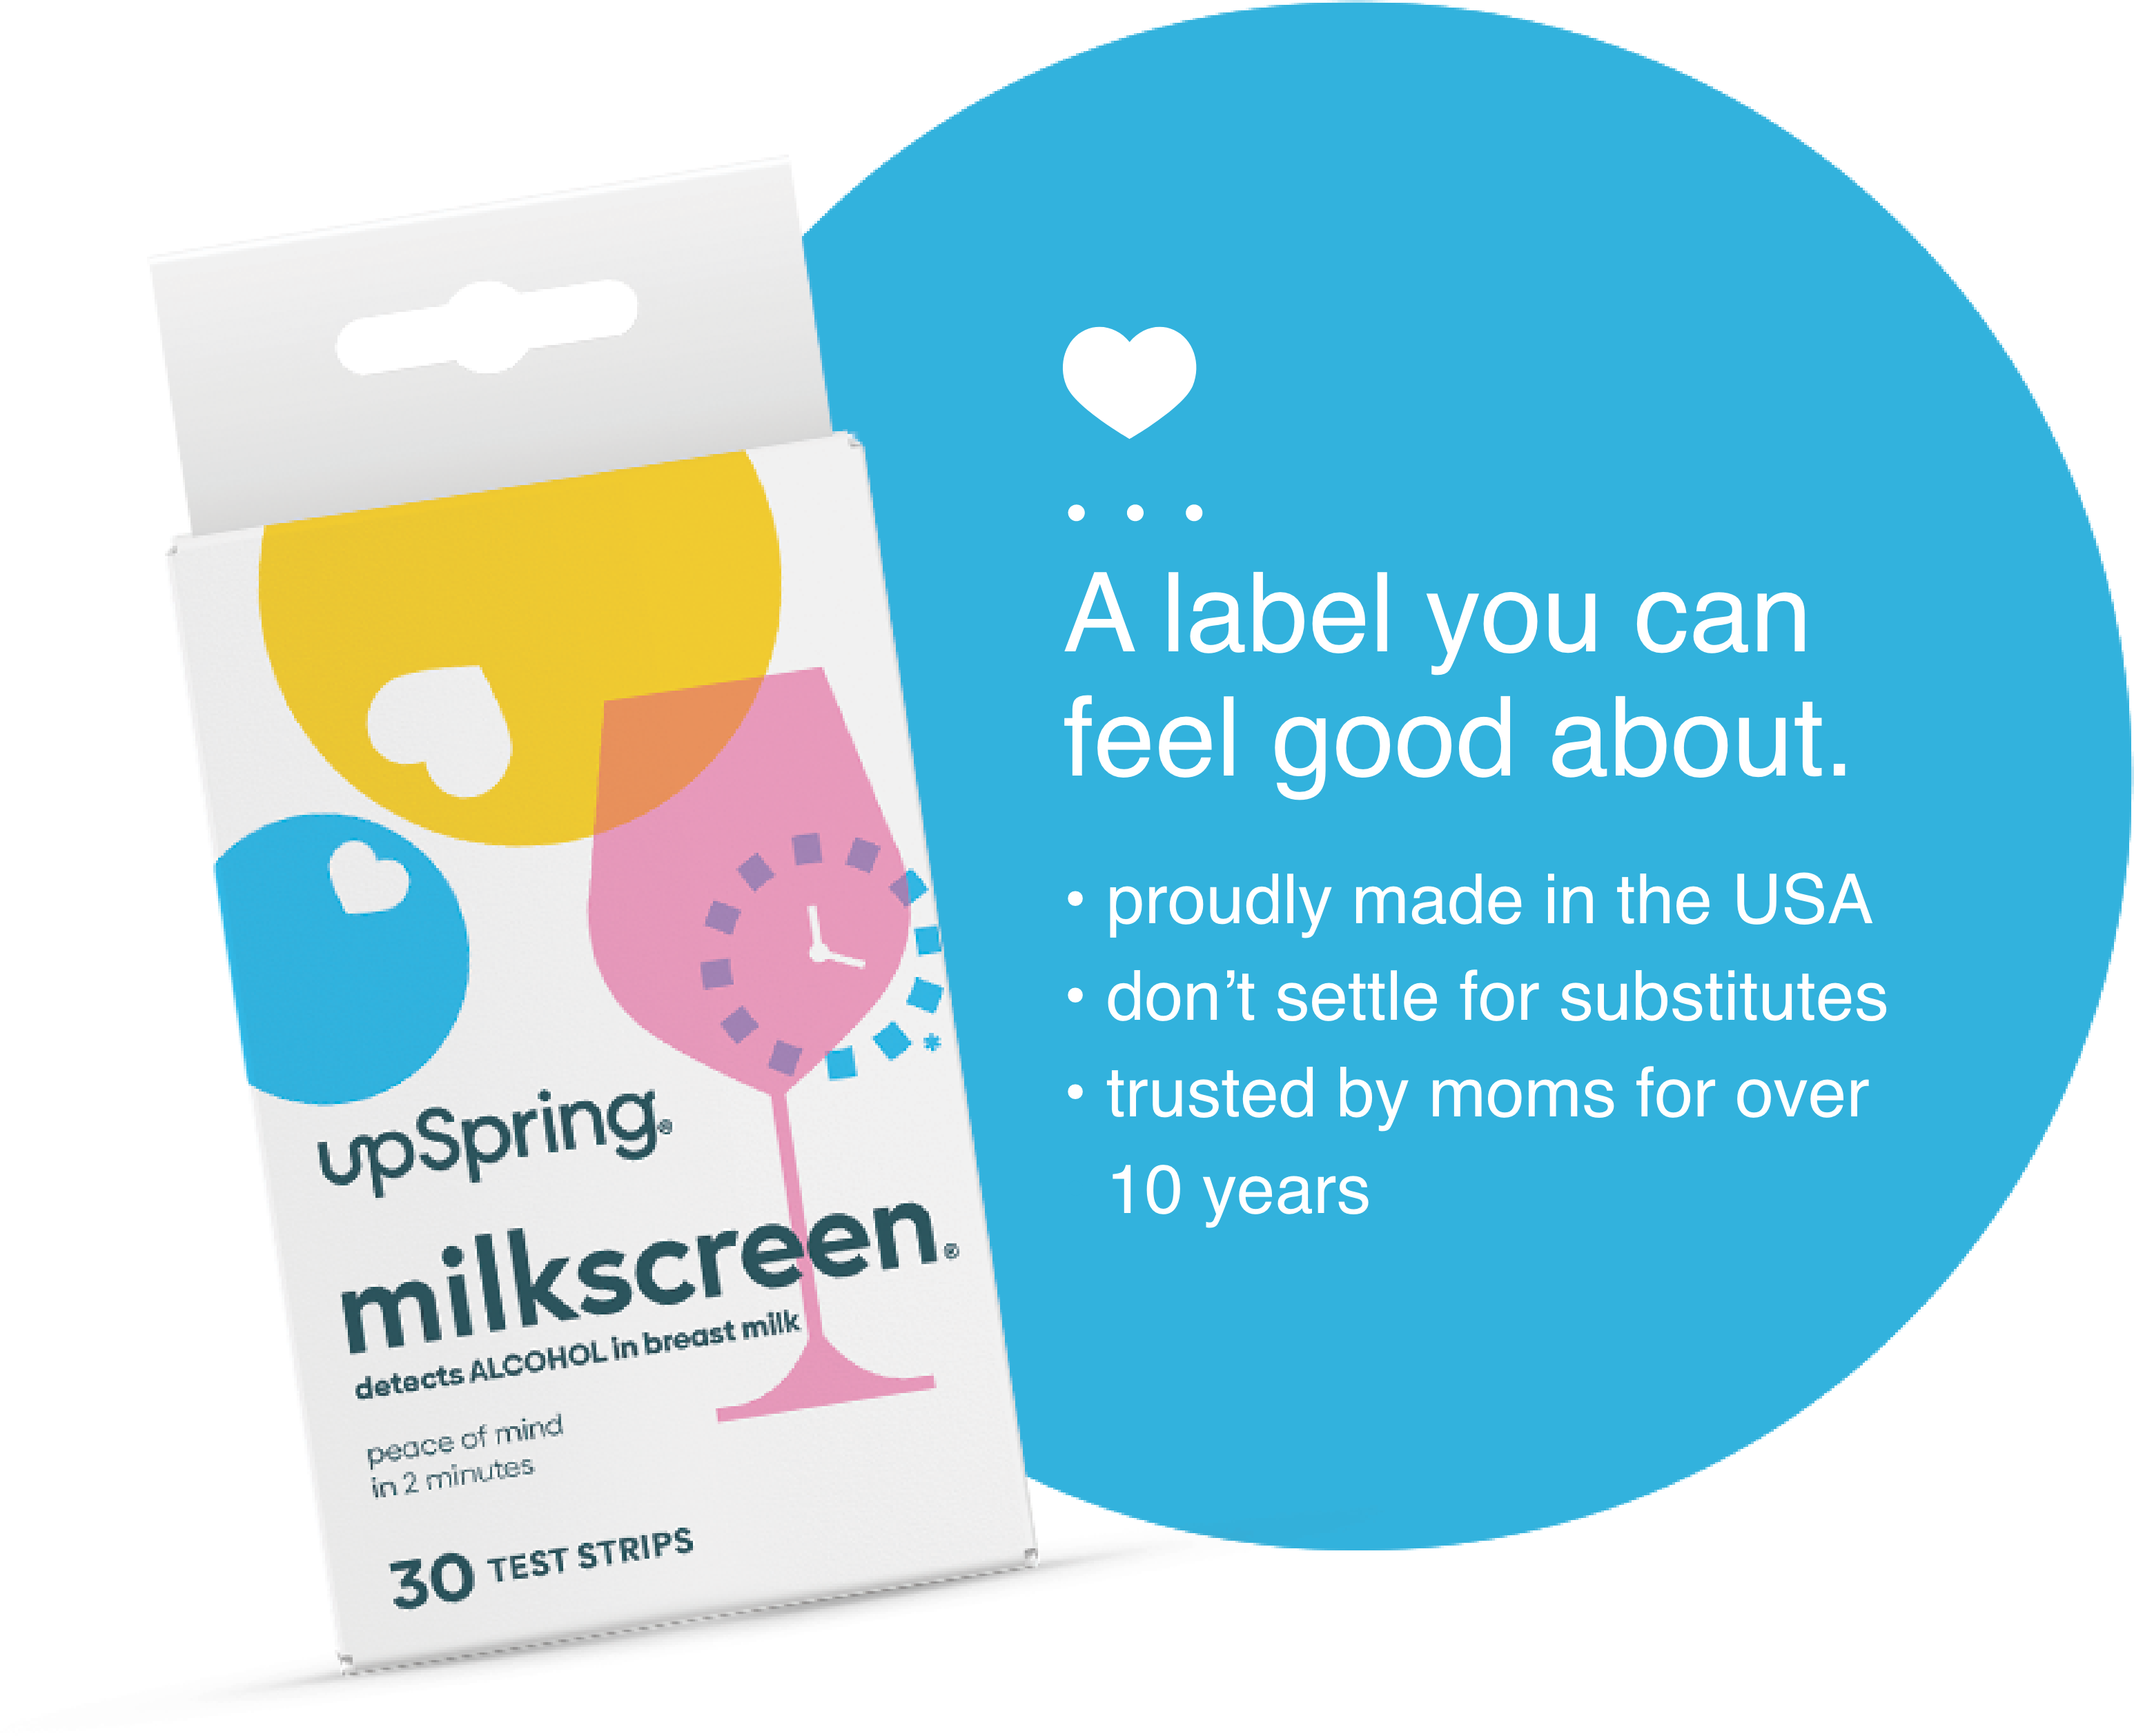 Easy@Home 20 Breastmilk Alcohol Test Strips, Nursing Milk Testing